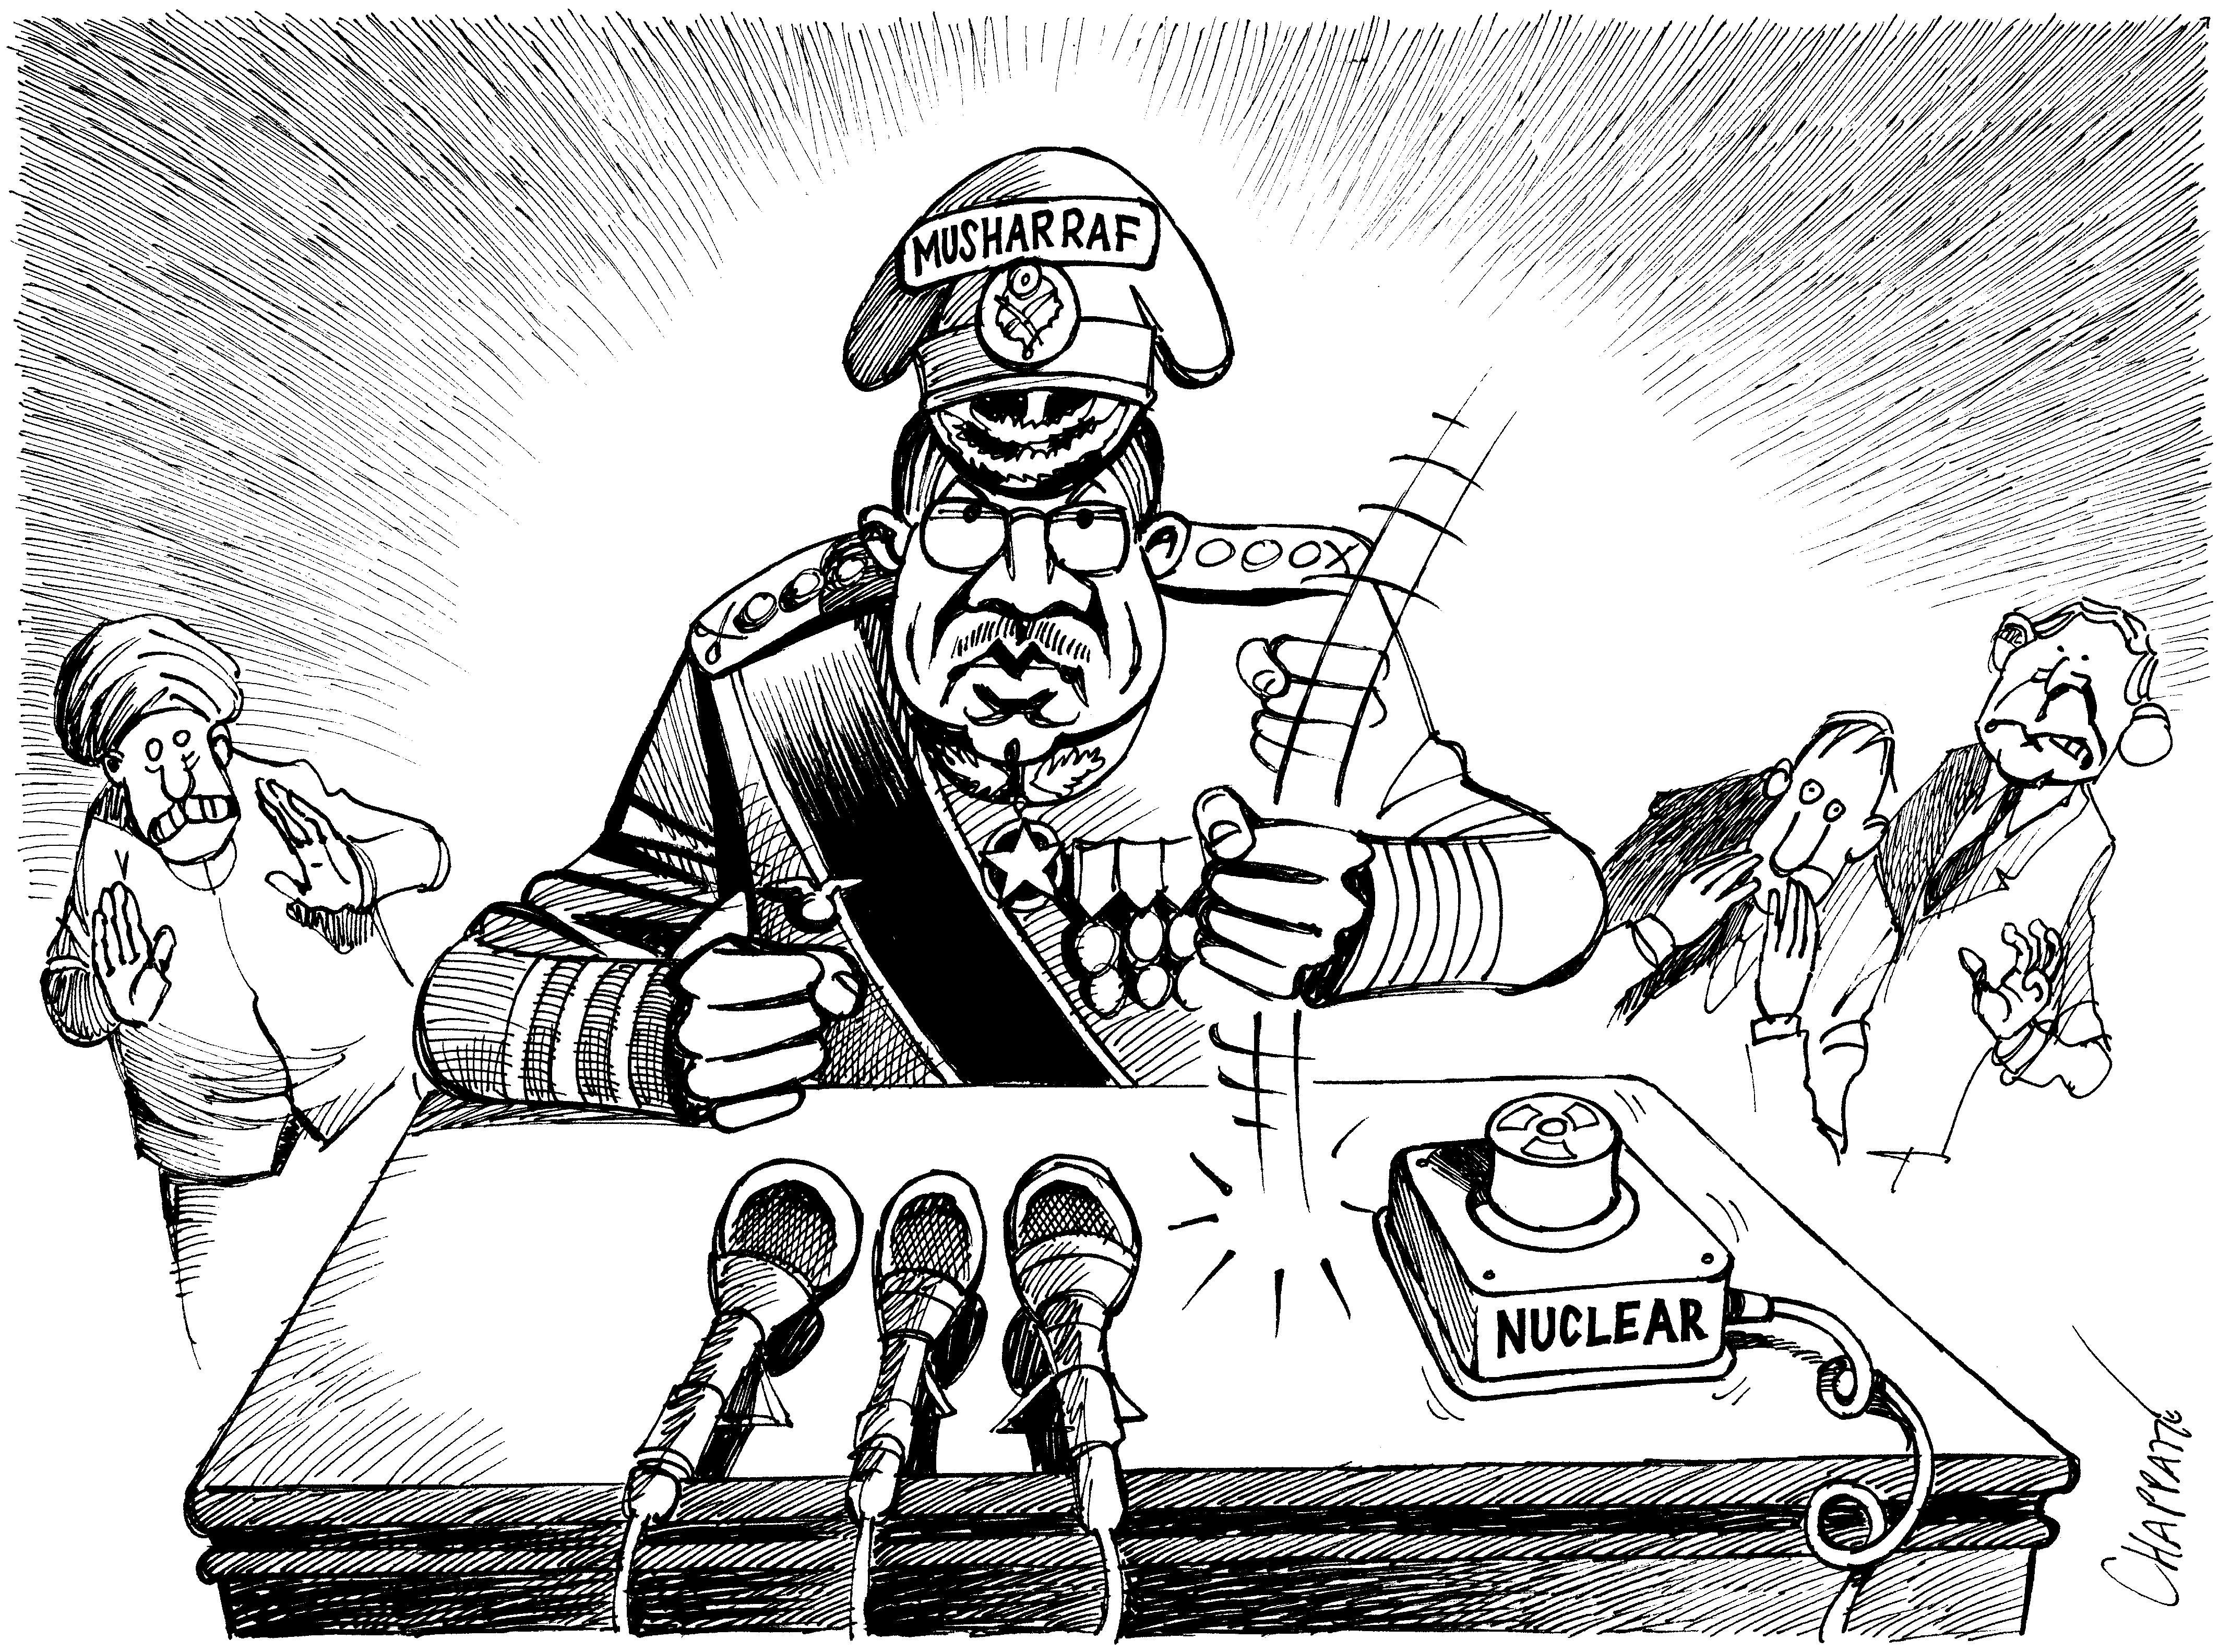 Musharraf's Coup